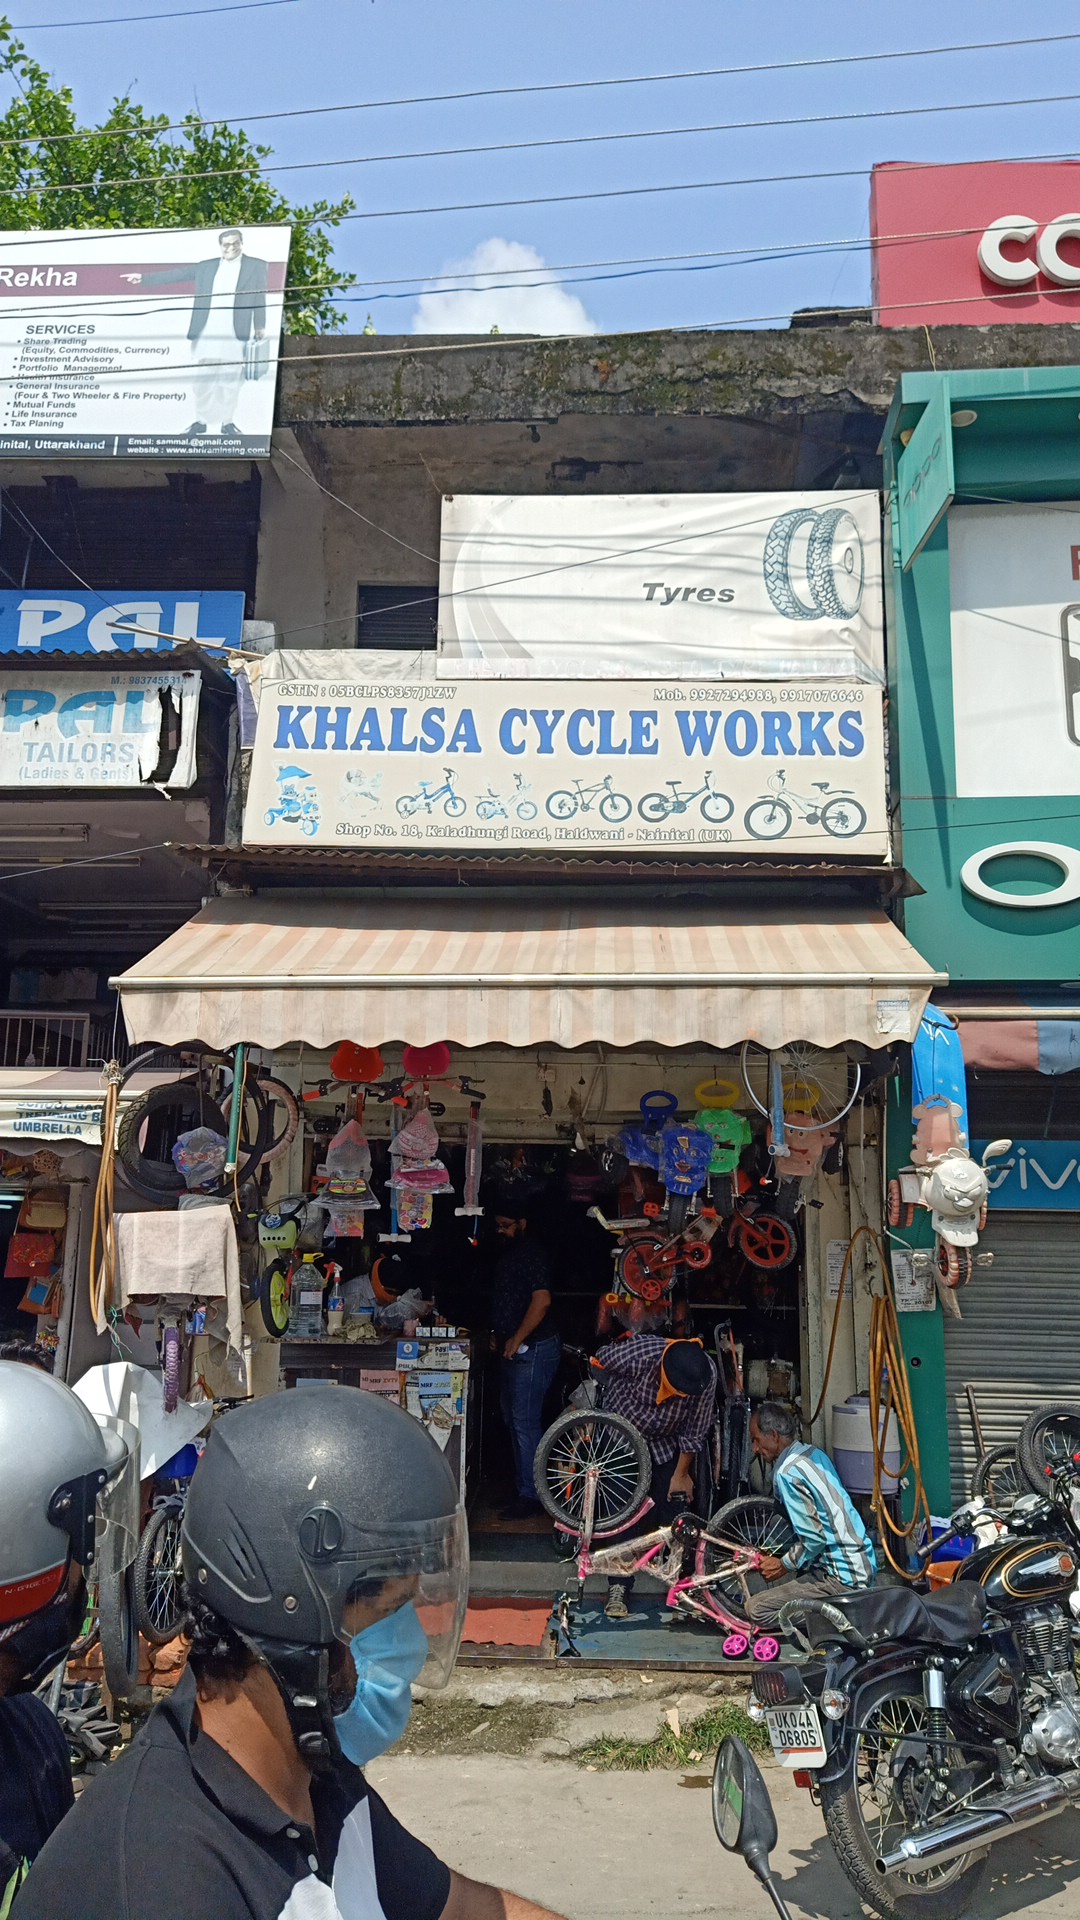 Khalsa cycle works